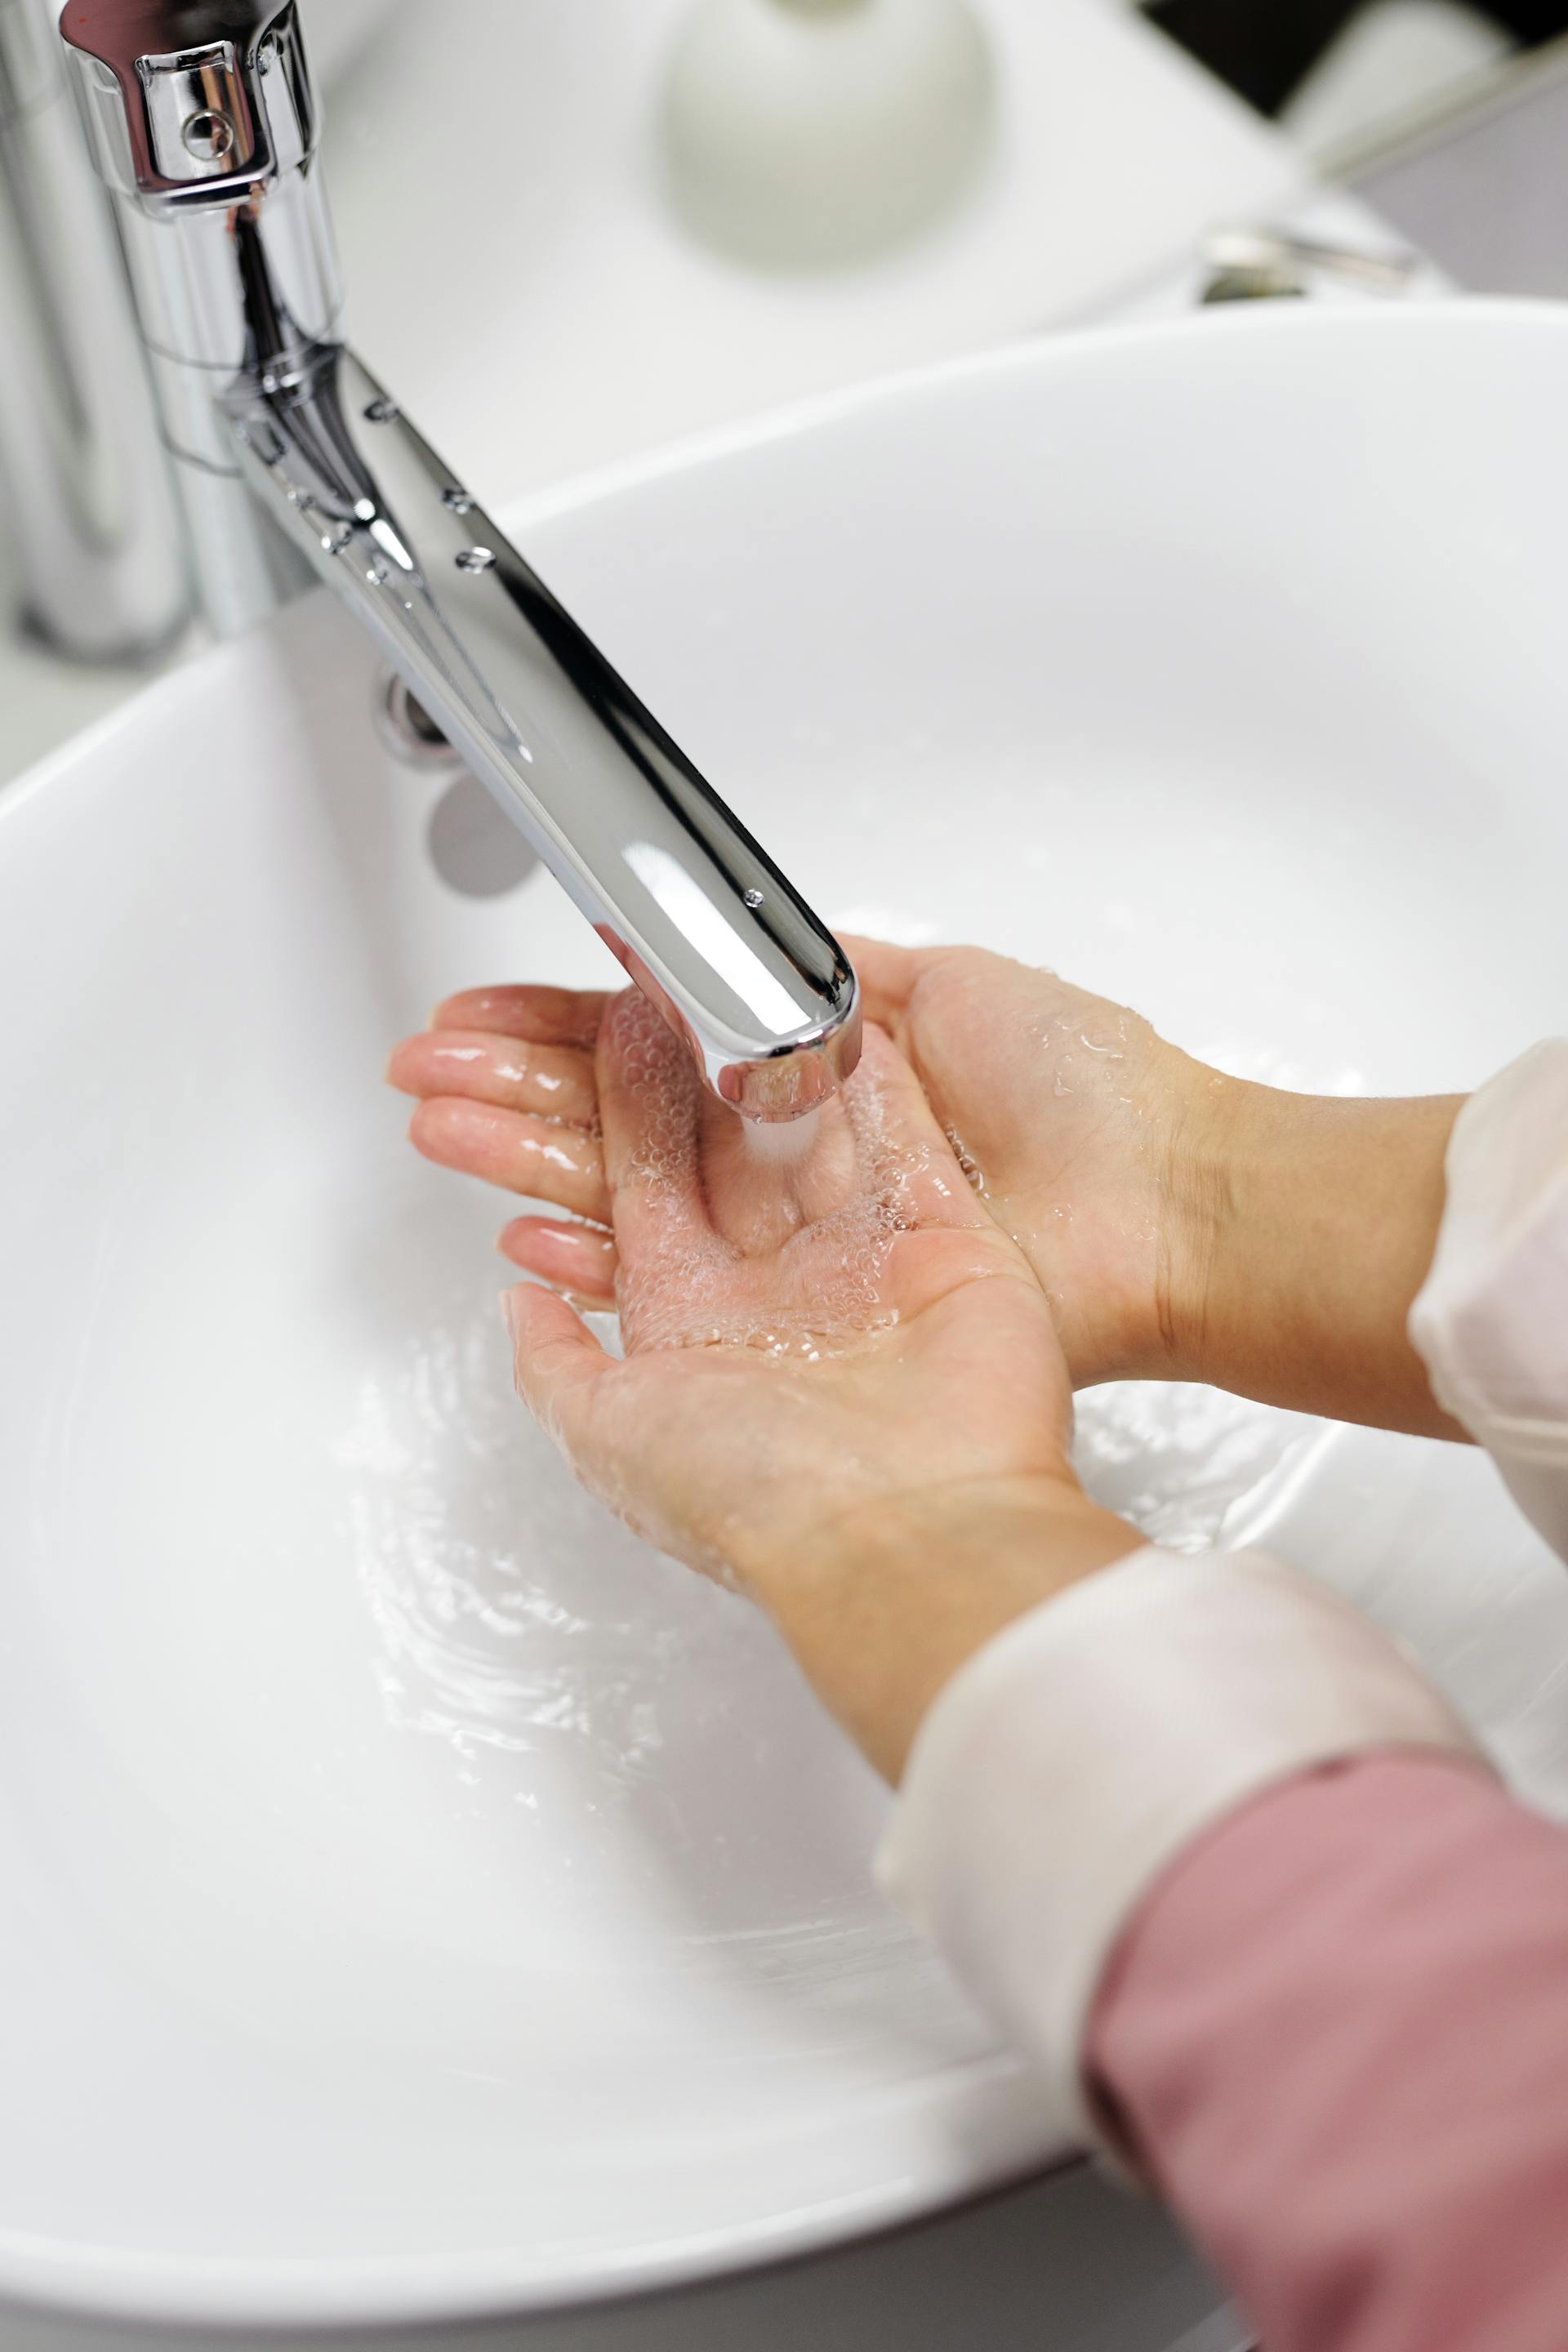 Hands under a running tap | Source: Pexels